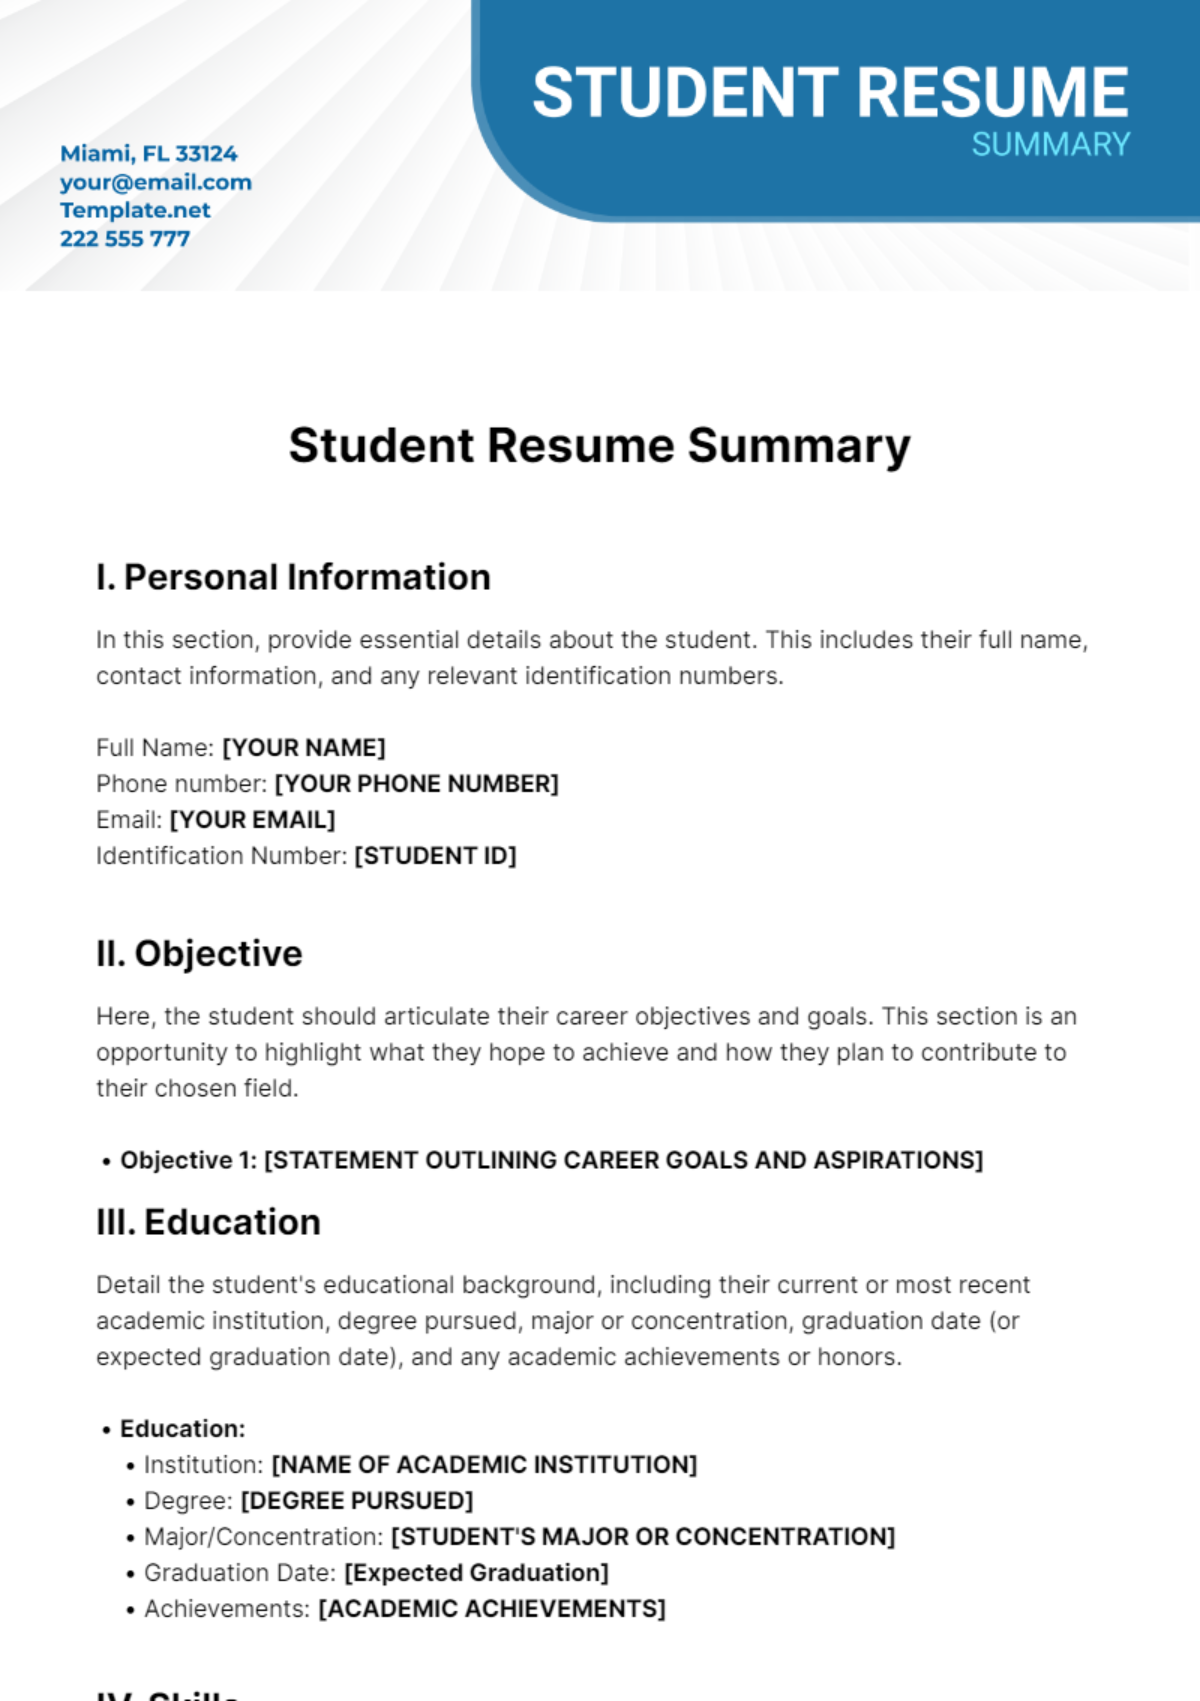 Student Resume Summary Template